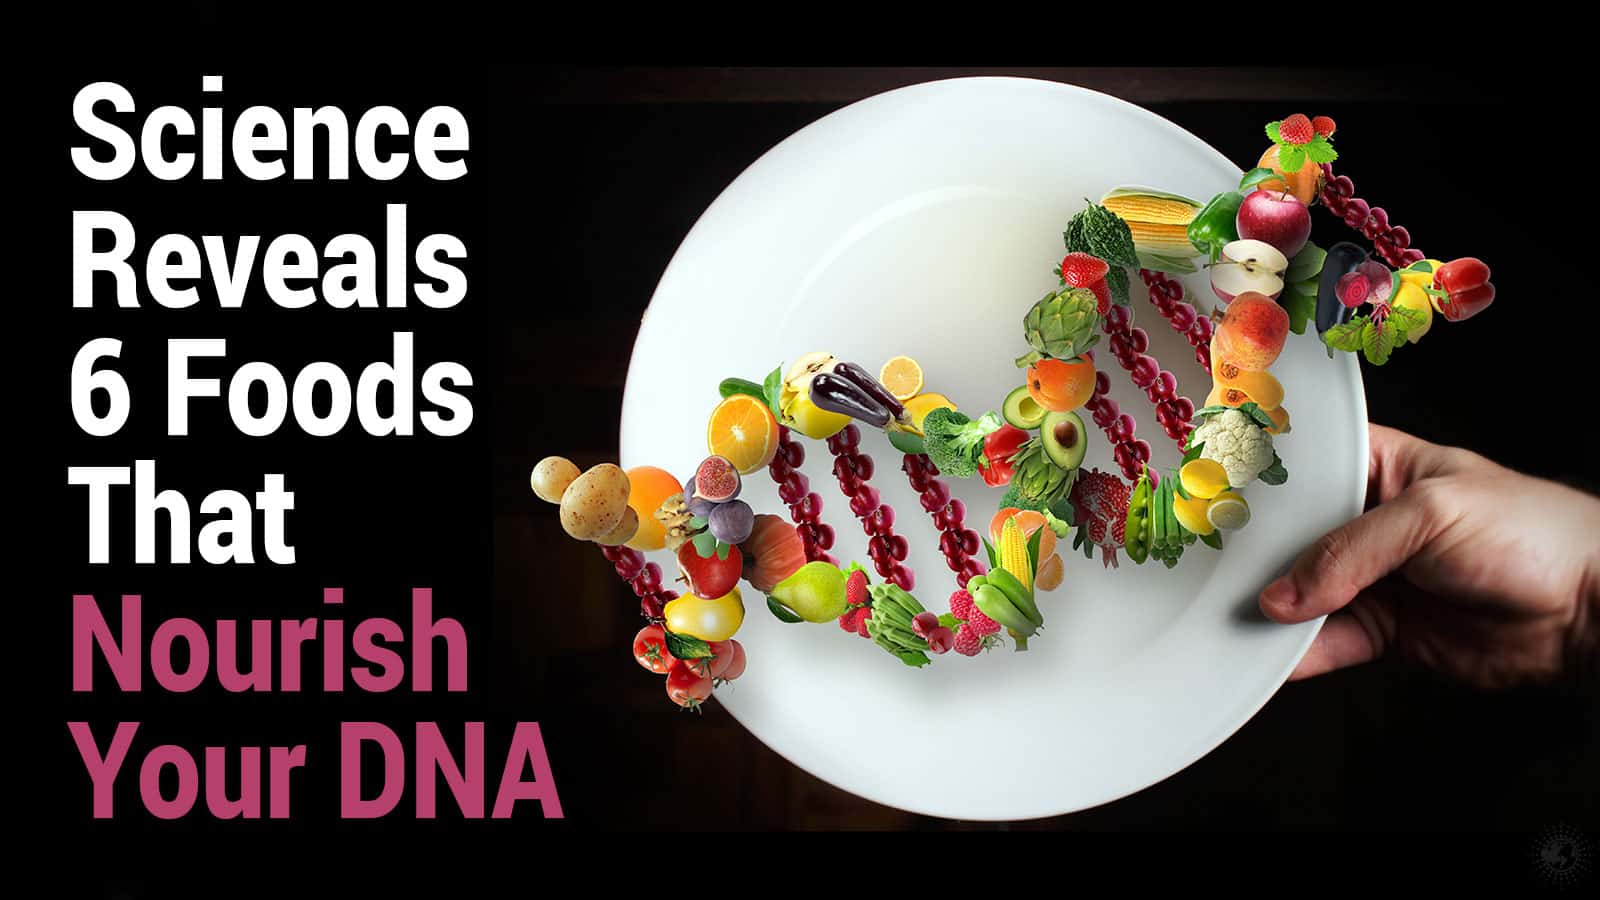 Science Reveals 6 Foods That Nourish Your DNA